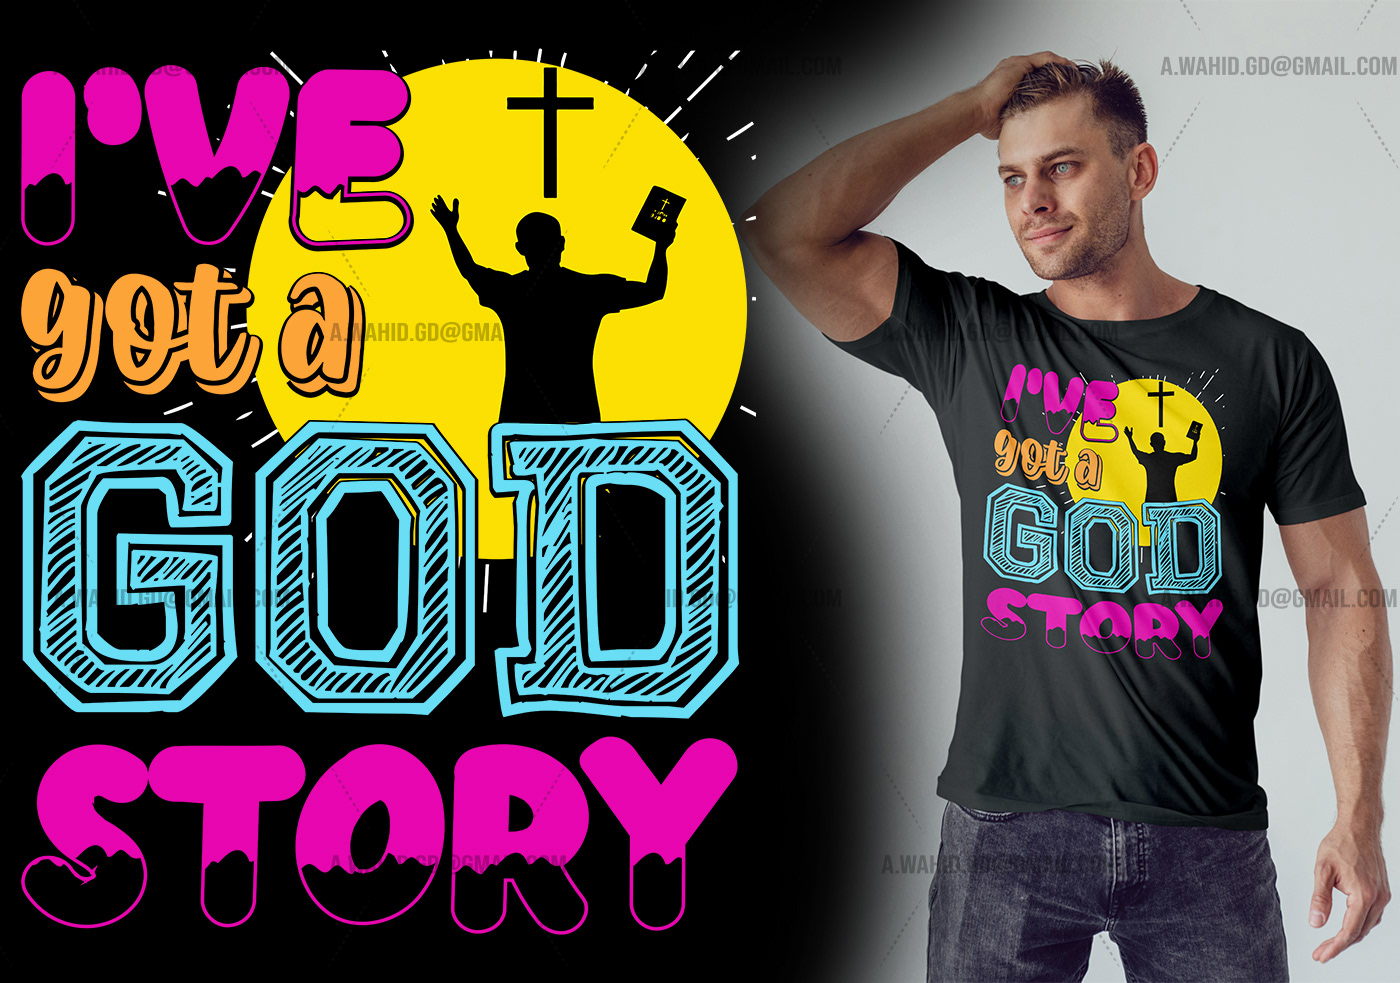 GOD story T shirt Design